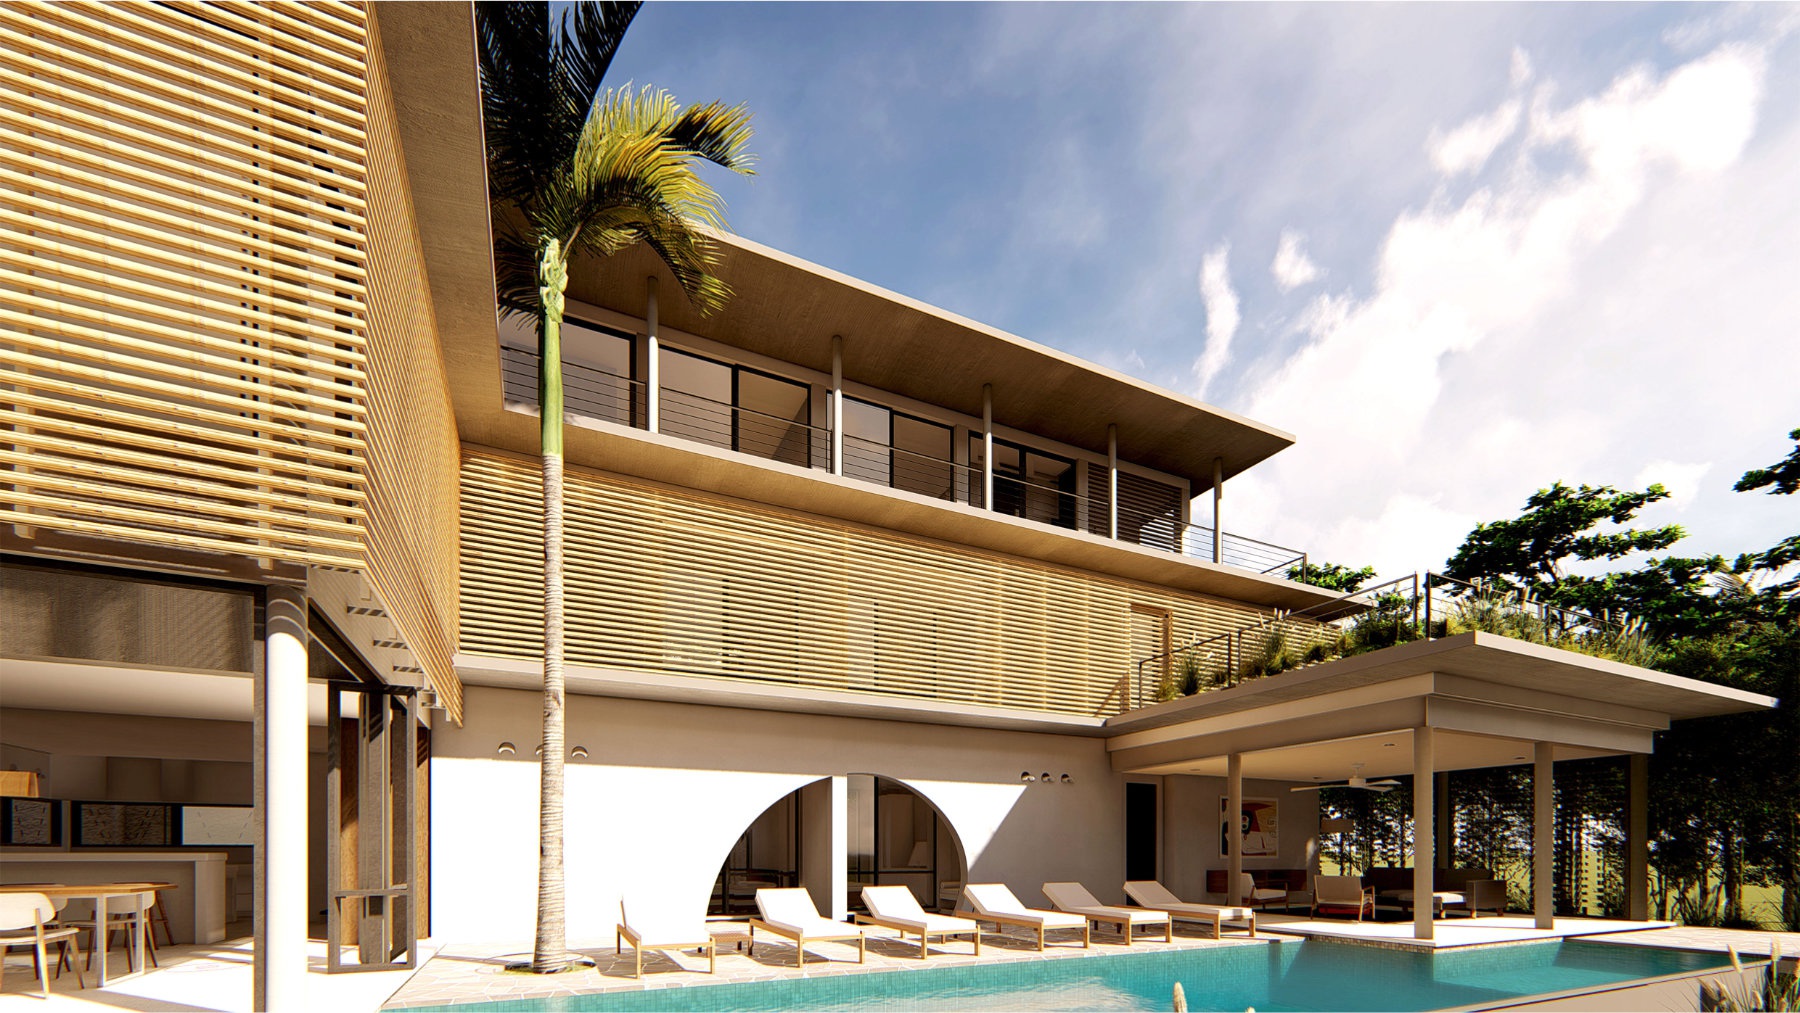 Design Assembly - Bisma Villa - Bali Architect - Interior Design - Bali Villa - Wooden Facade